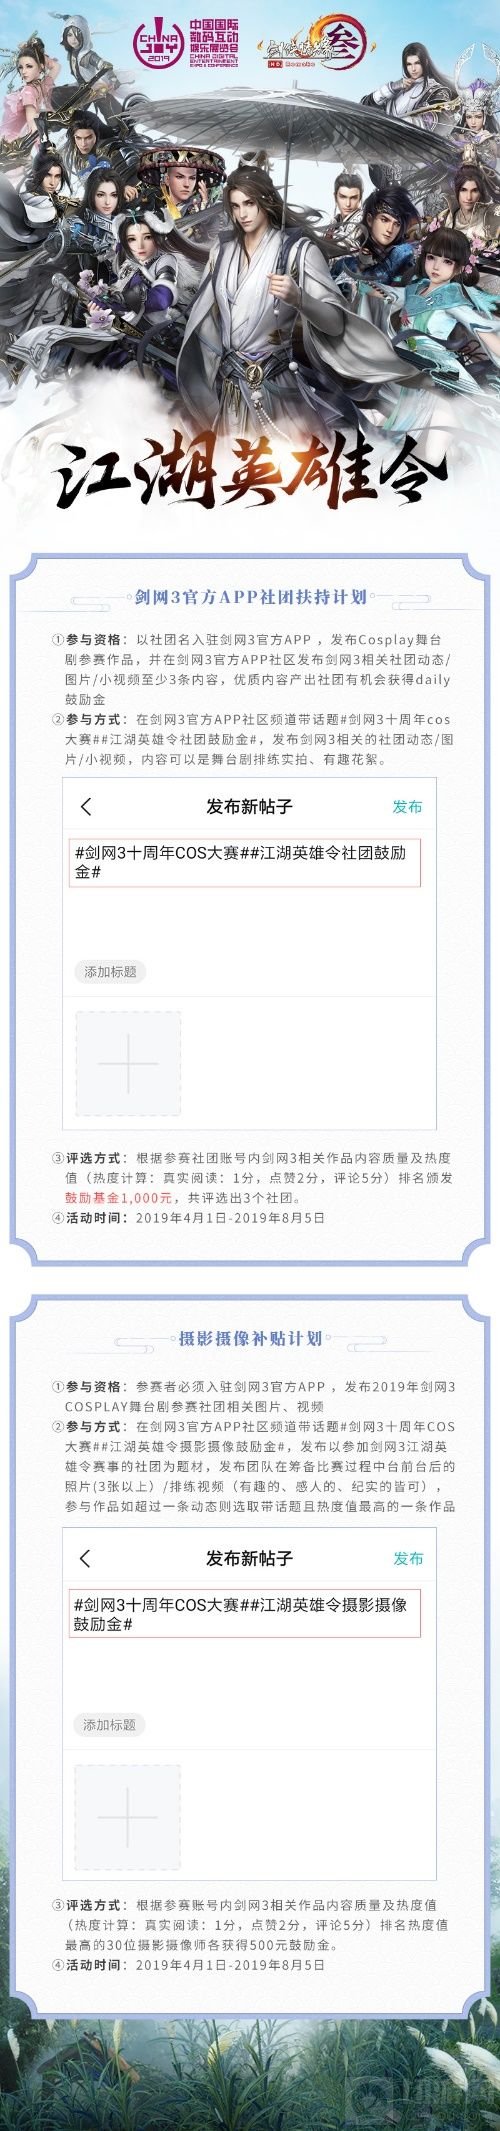 ChinaJoy 携手剑网3再次召集“江湖英雄令”！